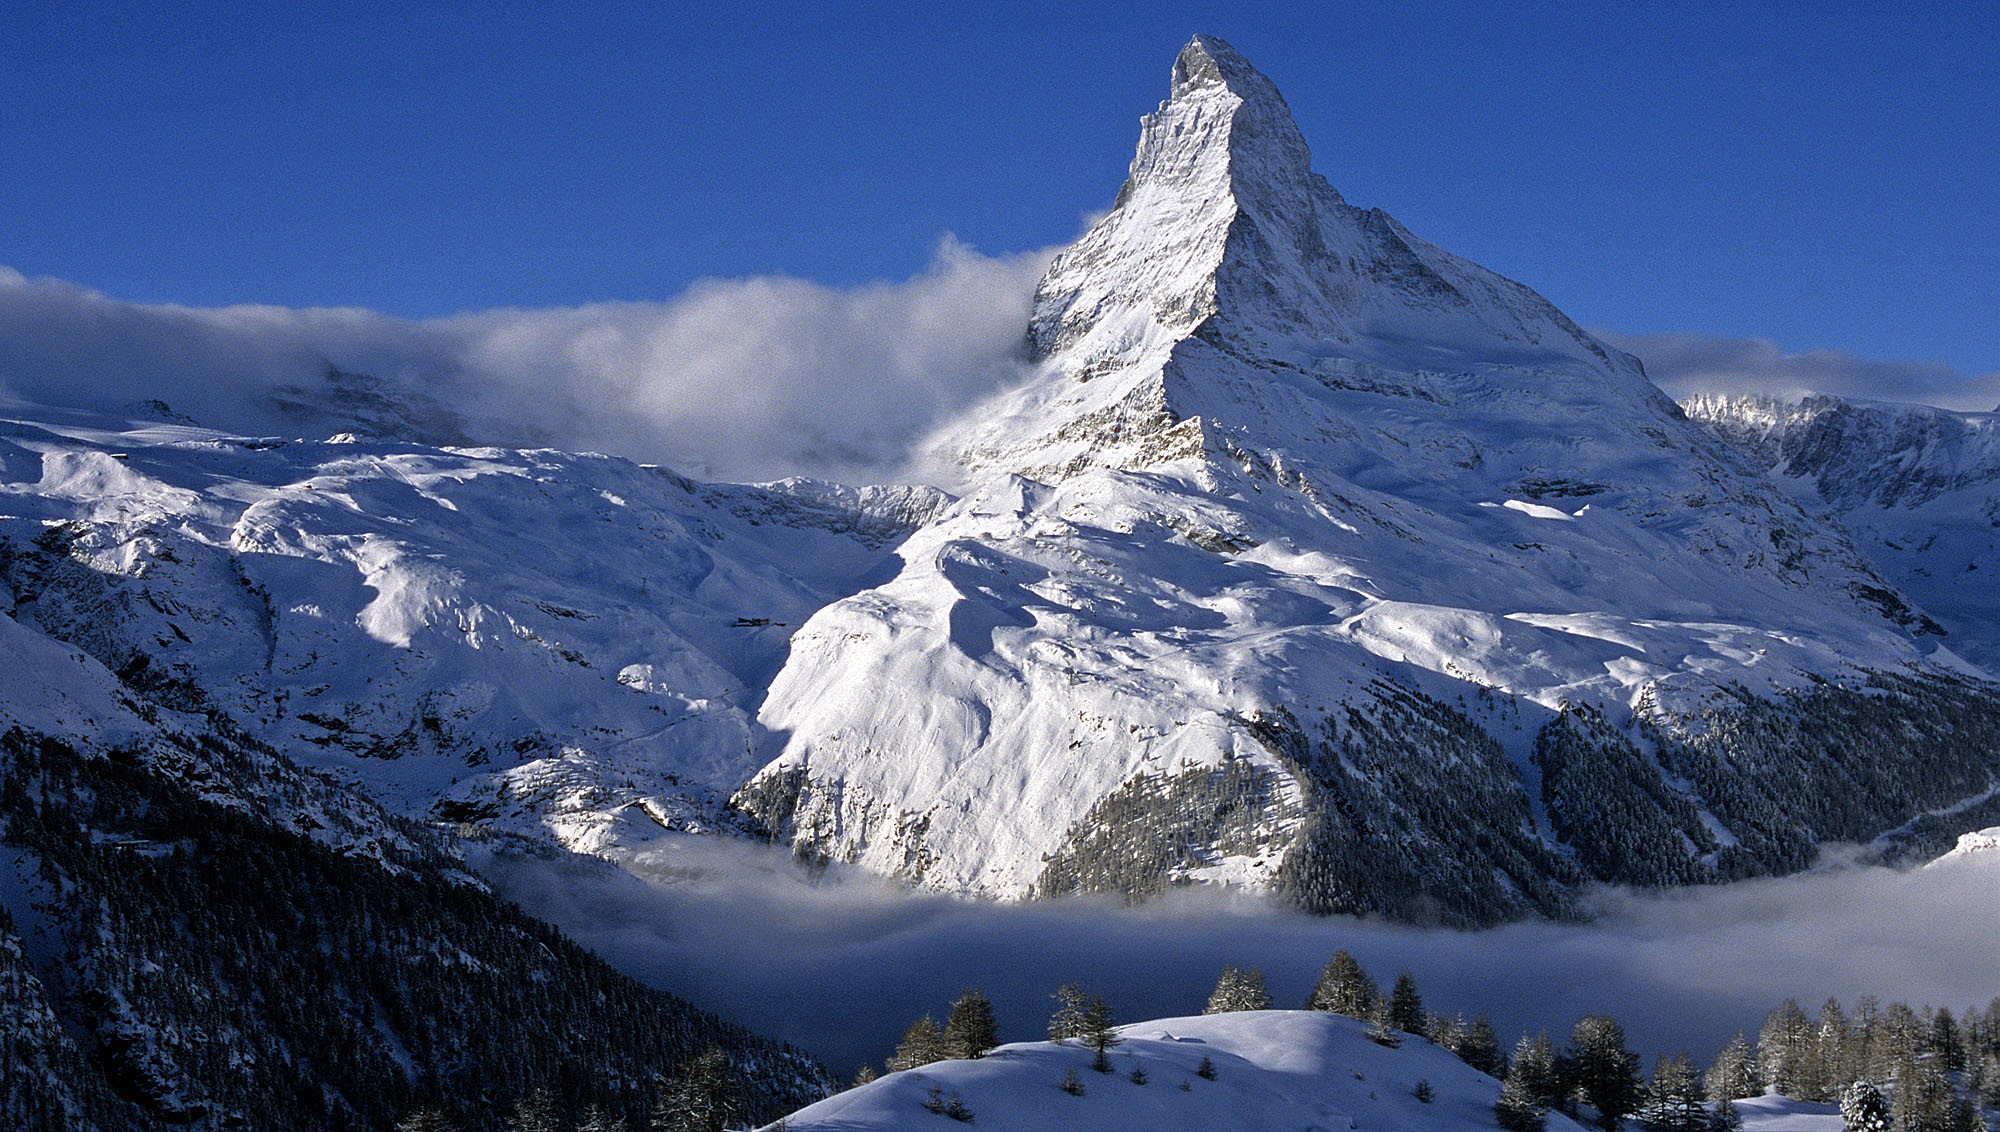 General 2000x1132 landscape mountains snow Matterhorn nature snowy peak snowy mountain cold ice outdoors Switzerland